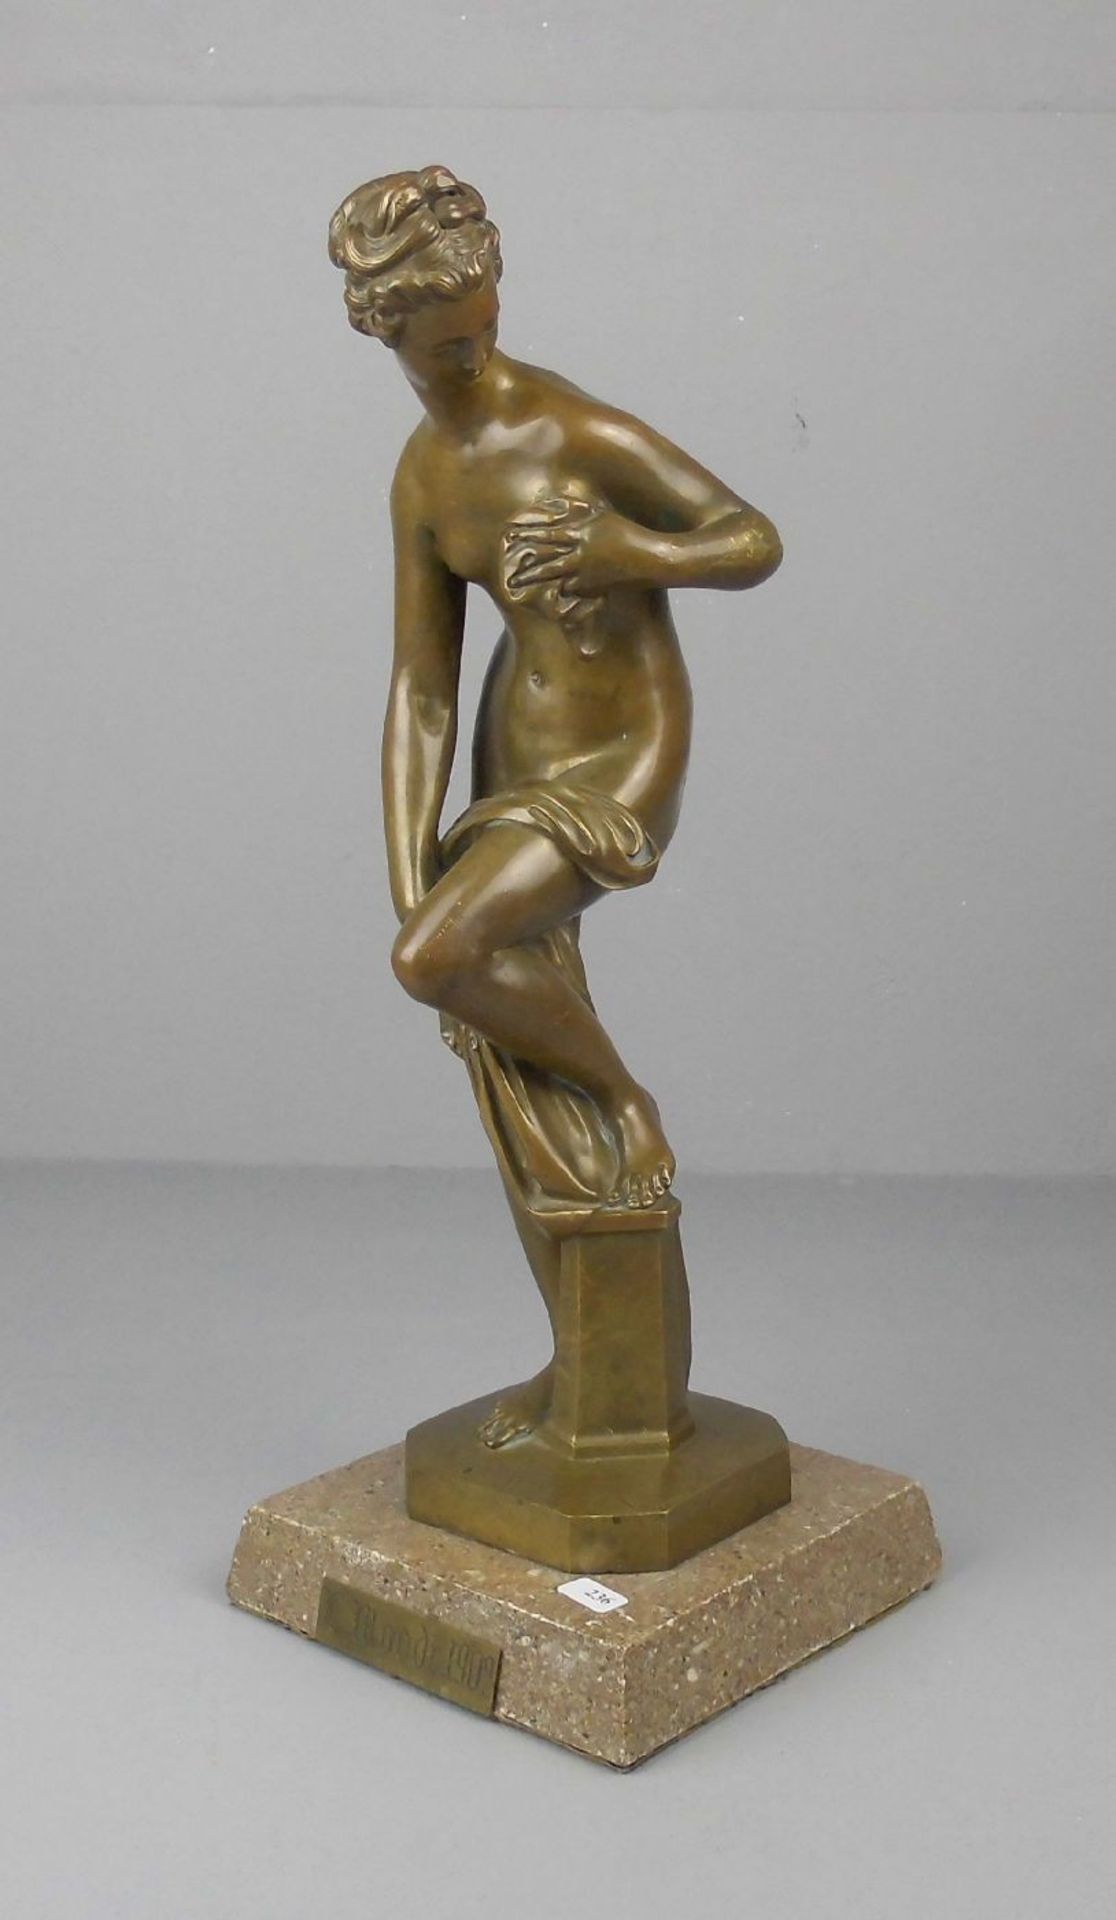 MOODI, L. (Bildhauer des 19. / 20. Jh.) - Skulptur / sculpture: "Badende / Venus", hellbraun